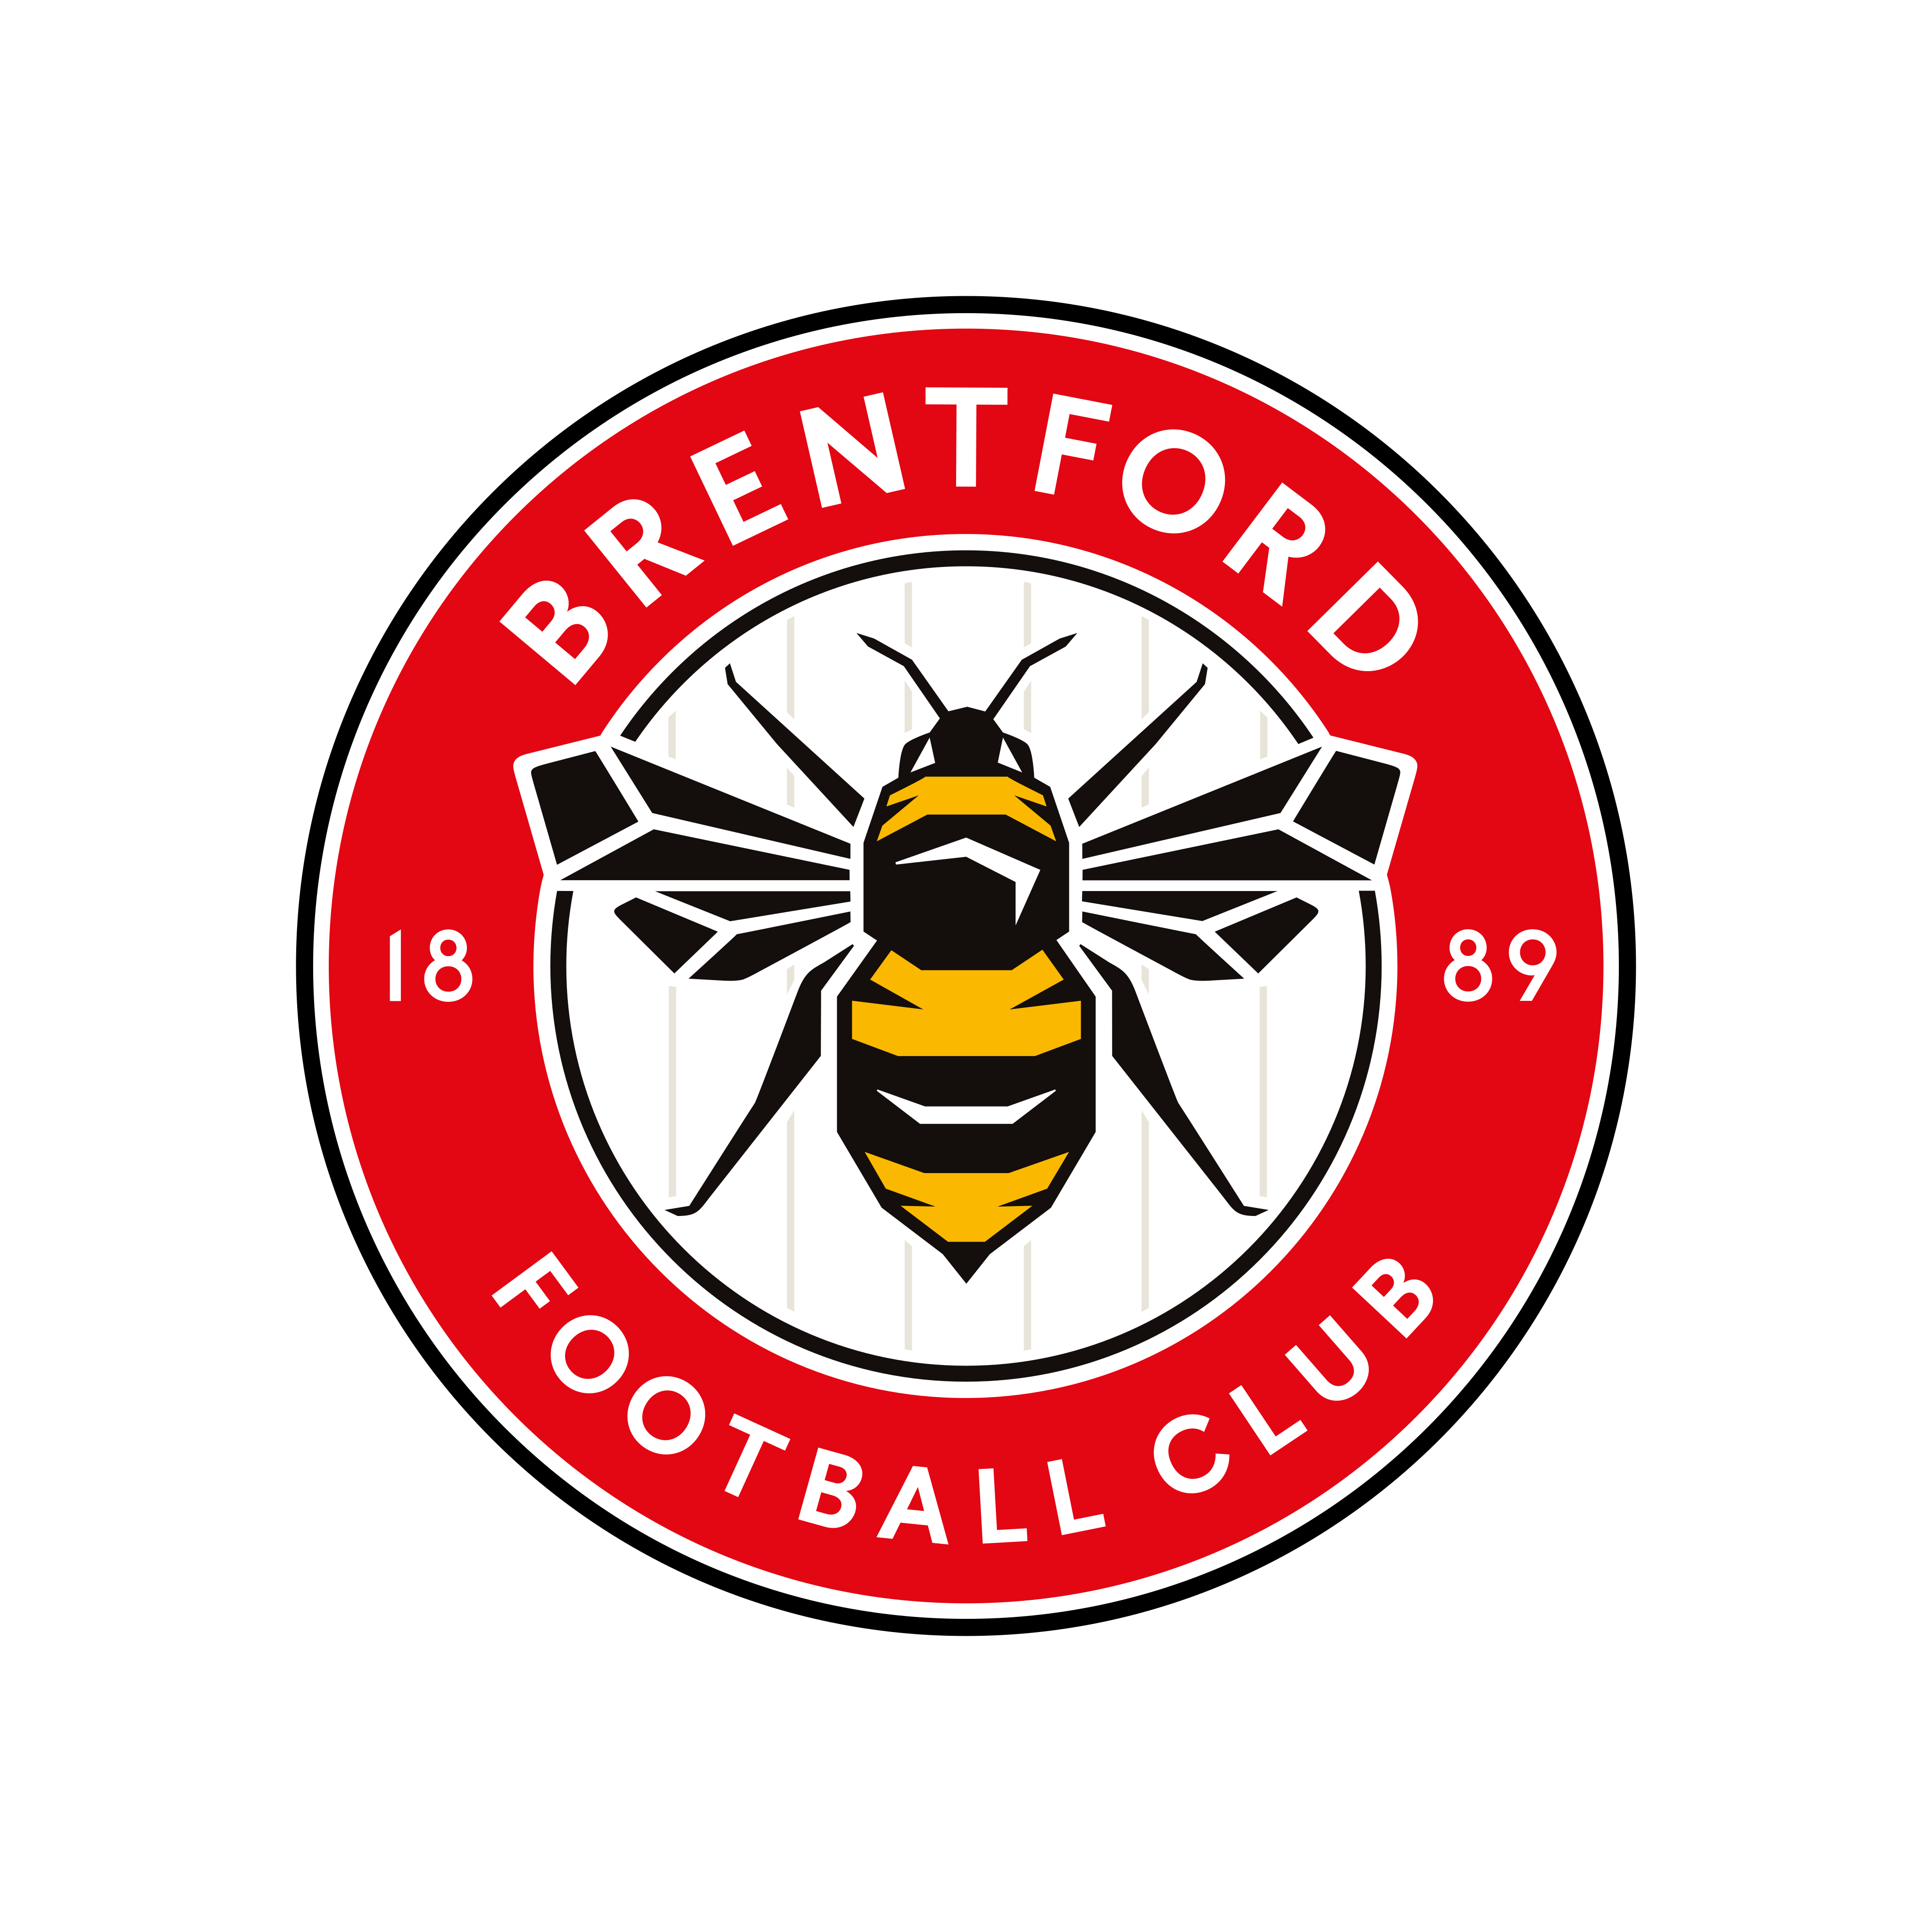 brentford fc logo 0 - Brentford FC Logo